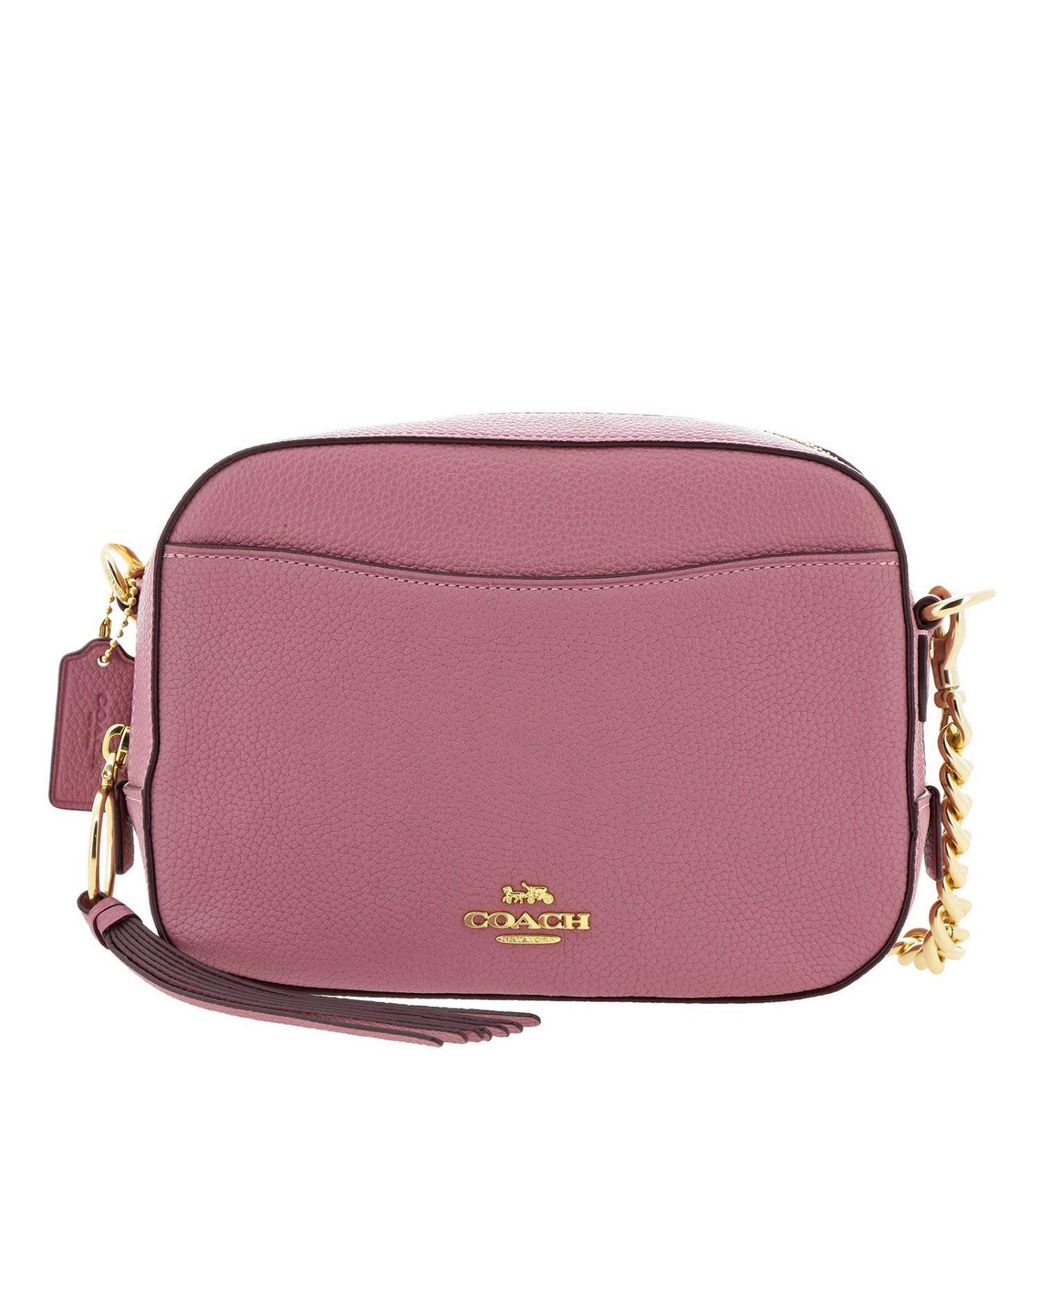 Coach small handbag - Bags and purses